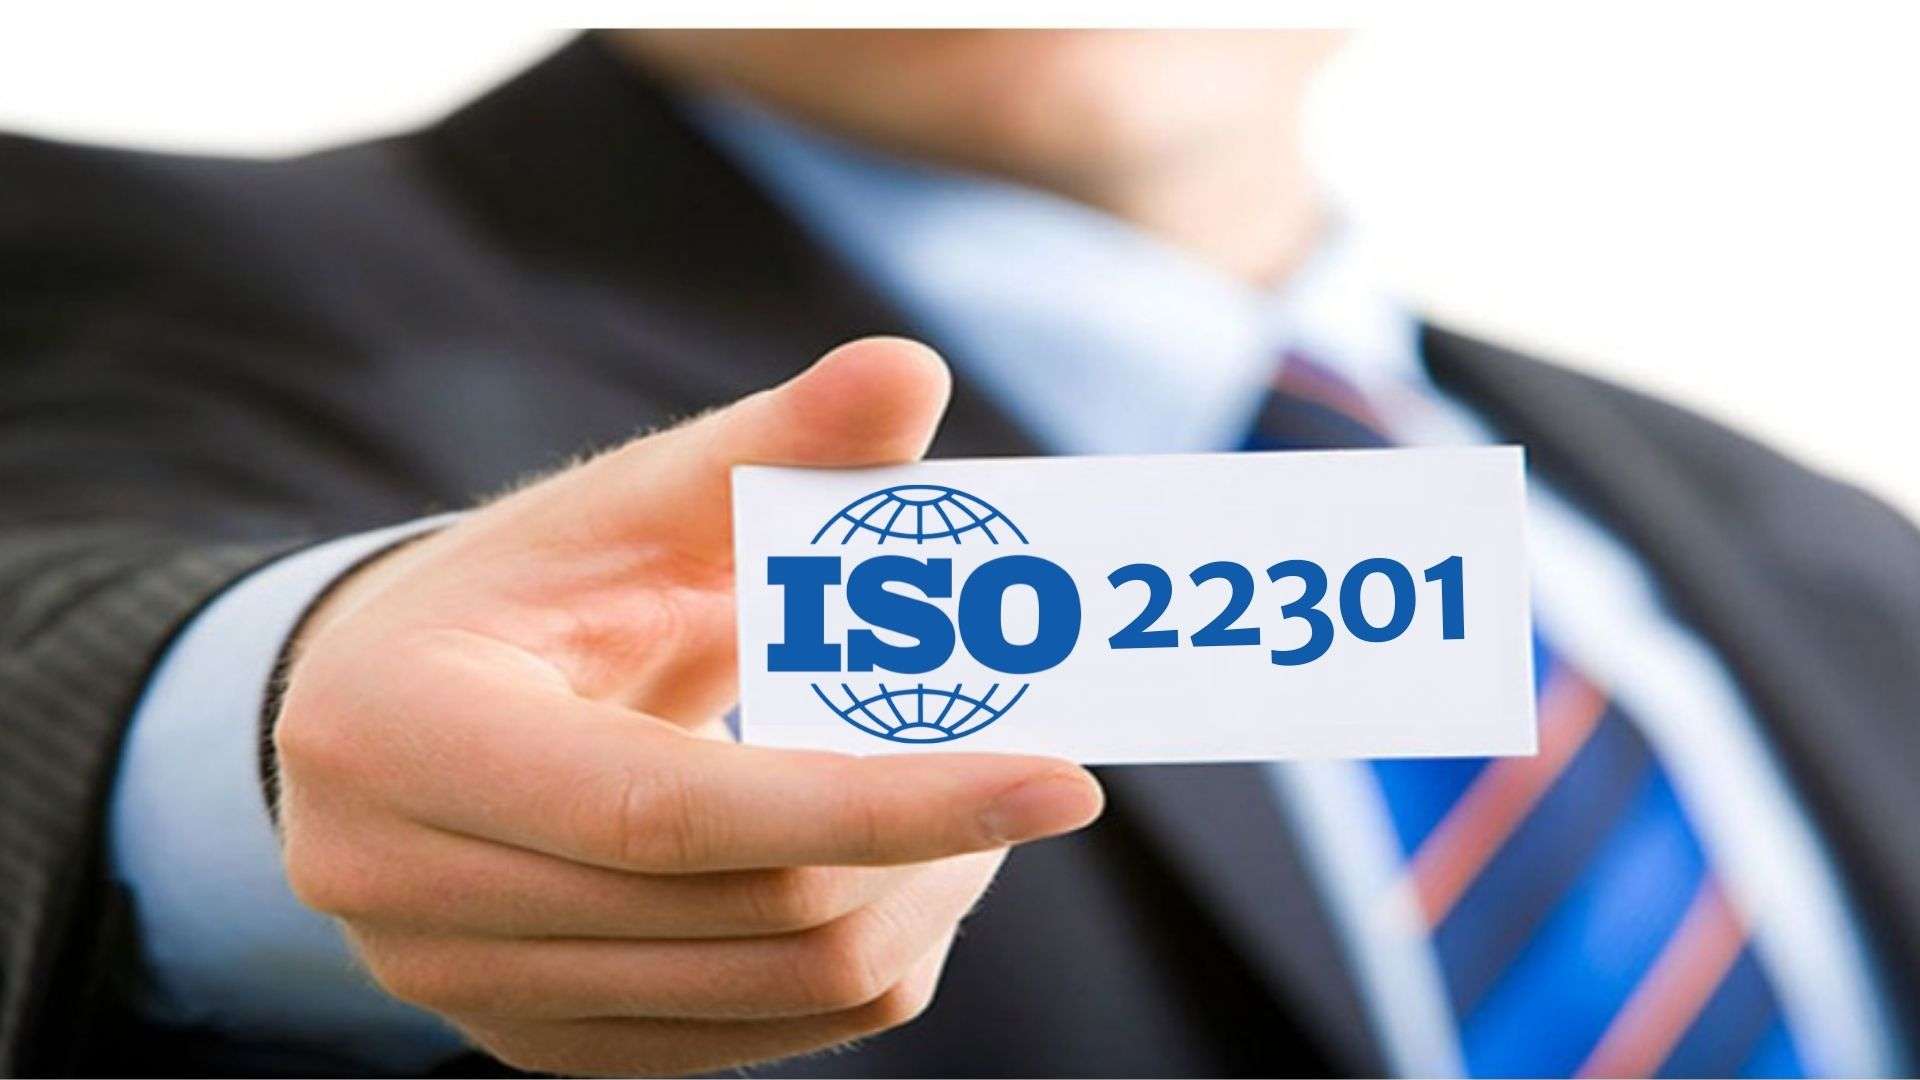 iso 22301 certification in dubai